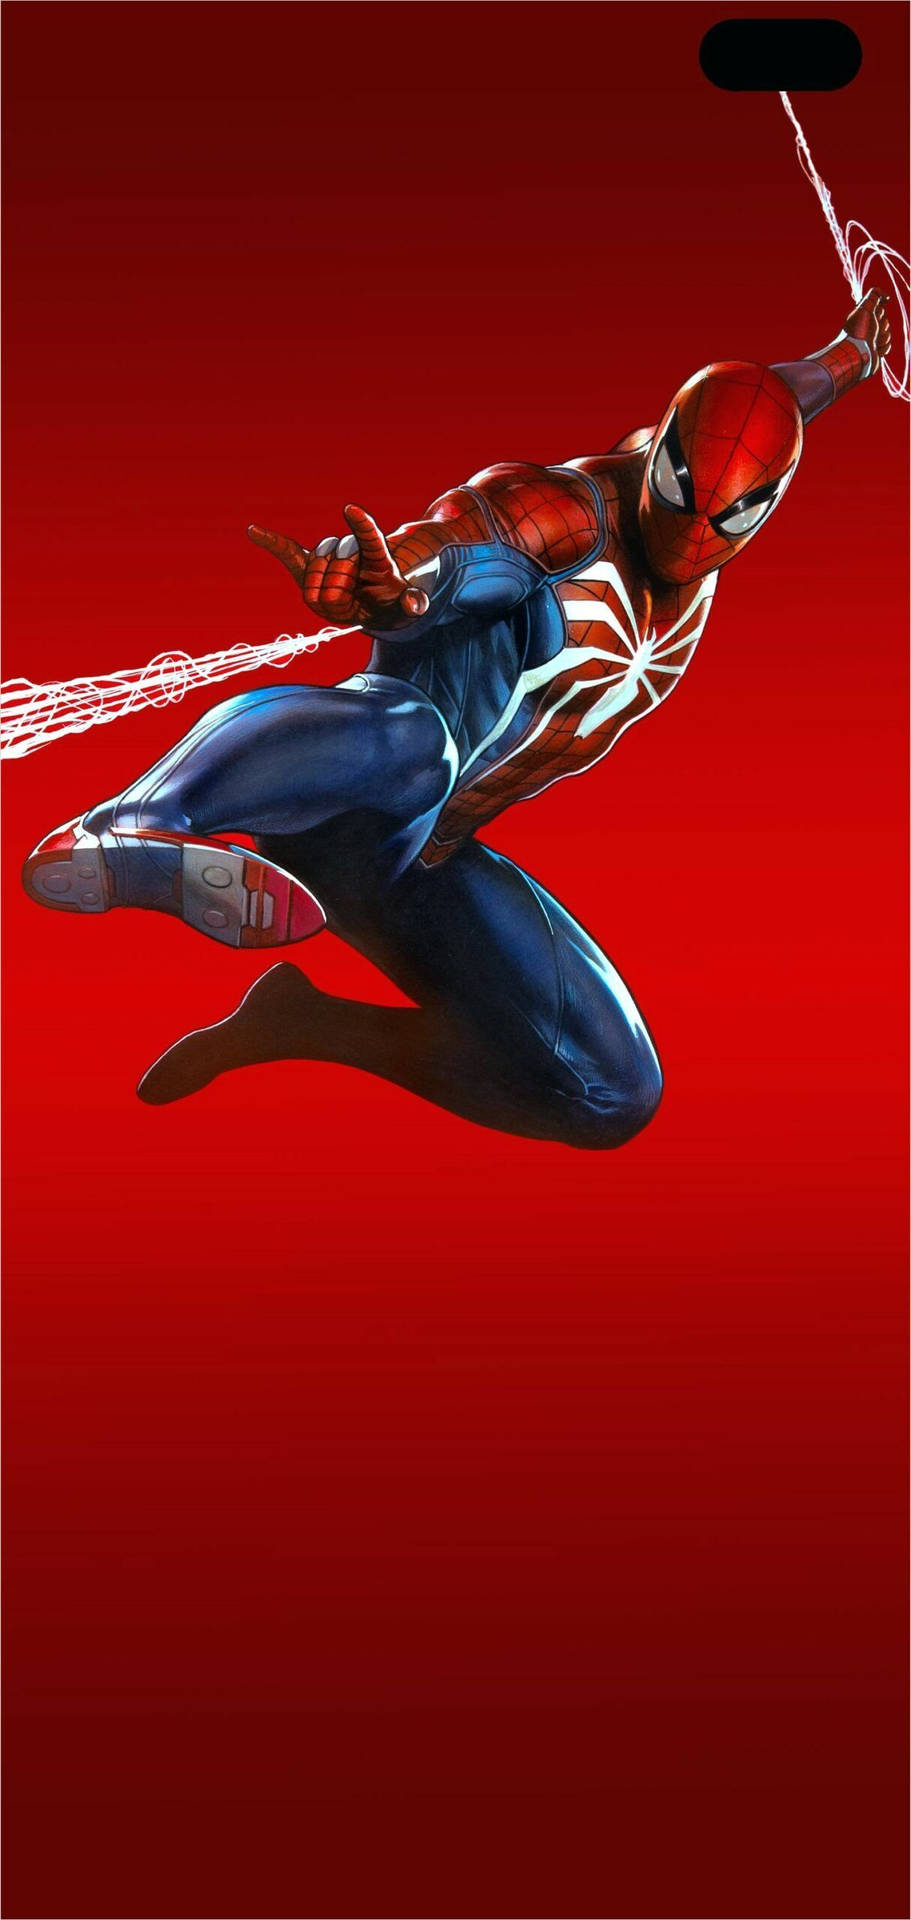 Samsunghandy Spider-man Wallpaper